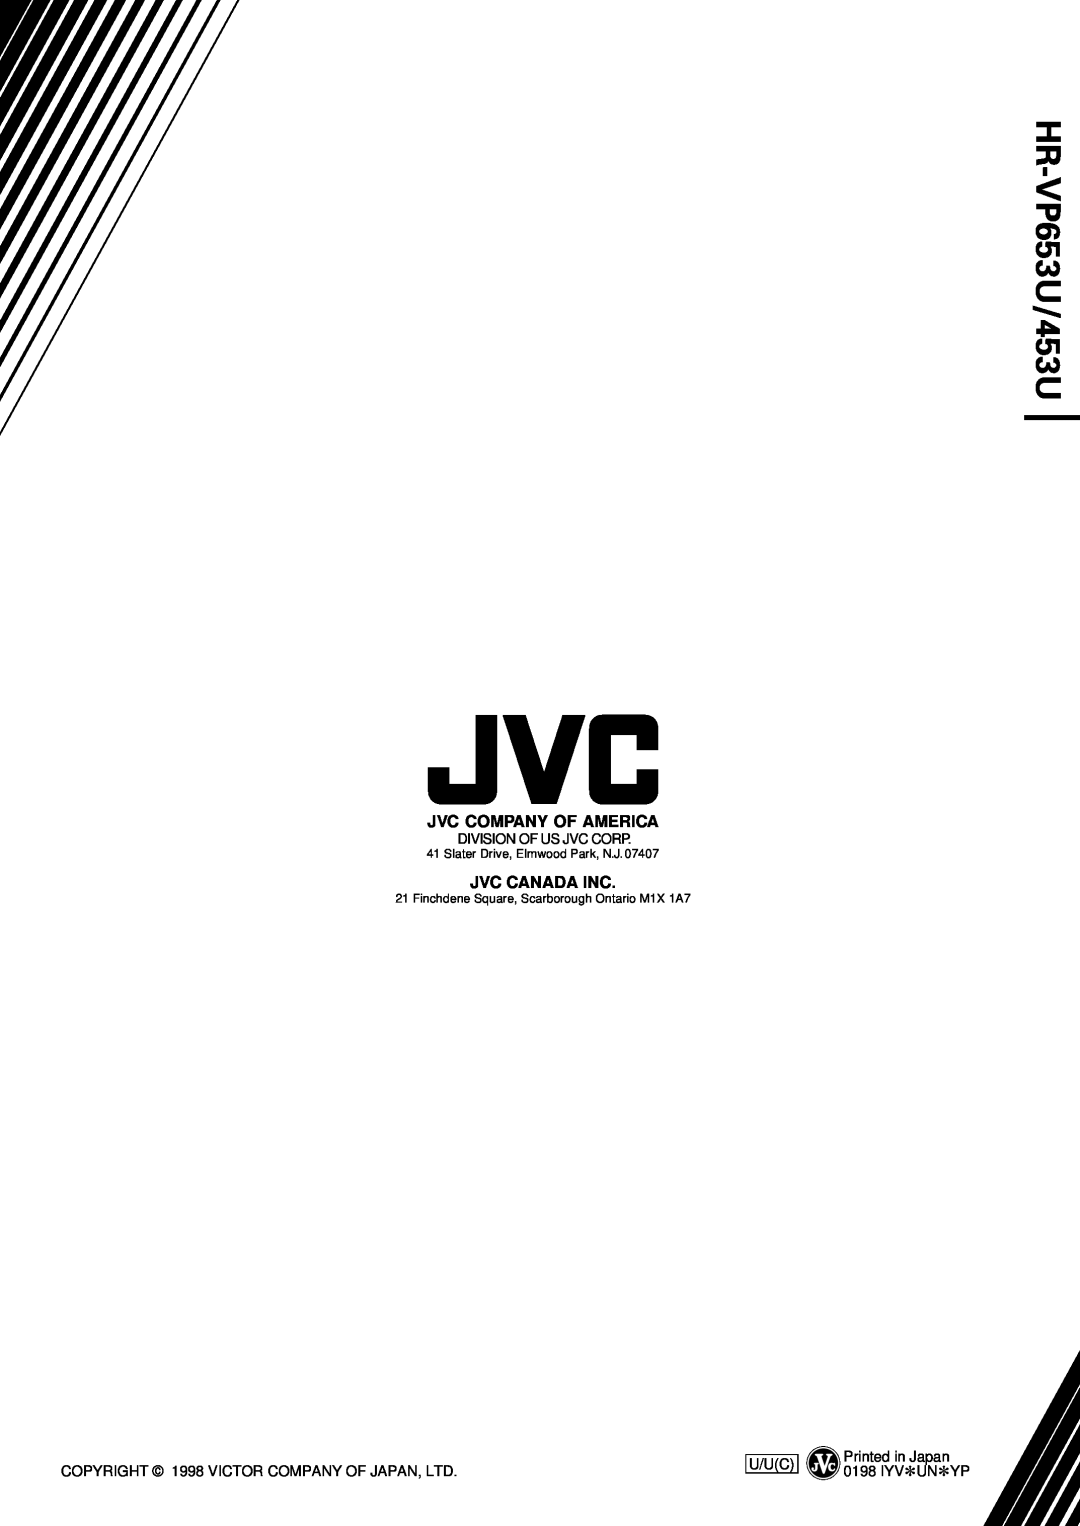 JVC HR-VP453U instruction manual HR-VP653U/453U, Jvc Company Of America, Jvc Canada Inc, Division Of Us Jvc Corp, U/Uc 